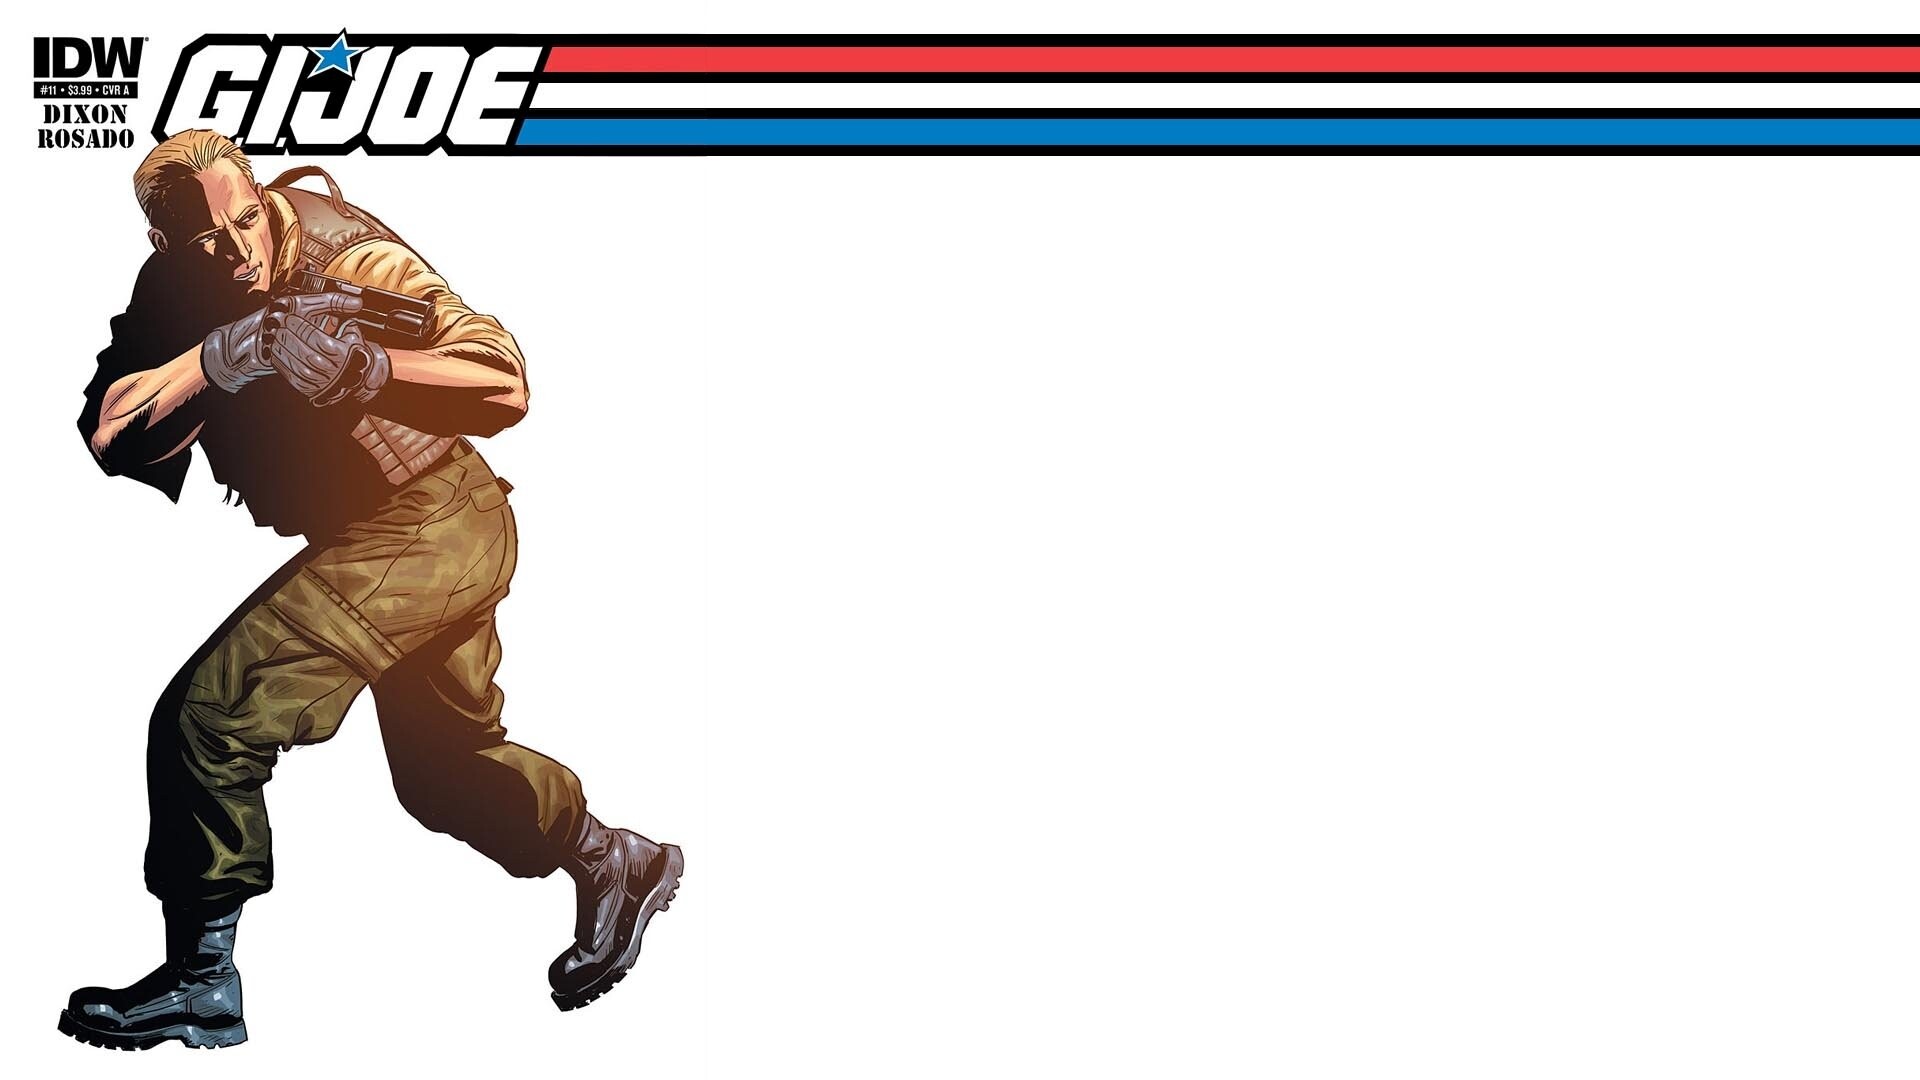 G.I. Joe (Cartoon): Dixon Rosado, Conrad S. Hauser, Duke, One Of The Main Characters In All The Franchise. 1920x1080 Full HD Wallpaper.